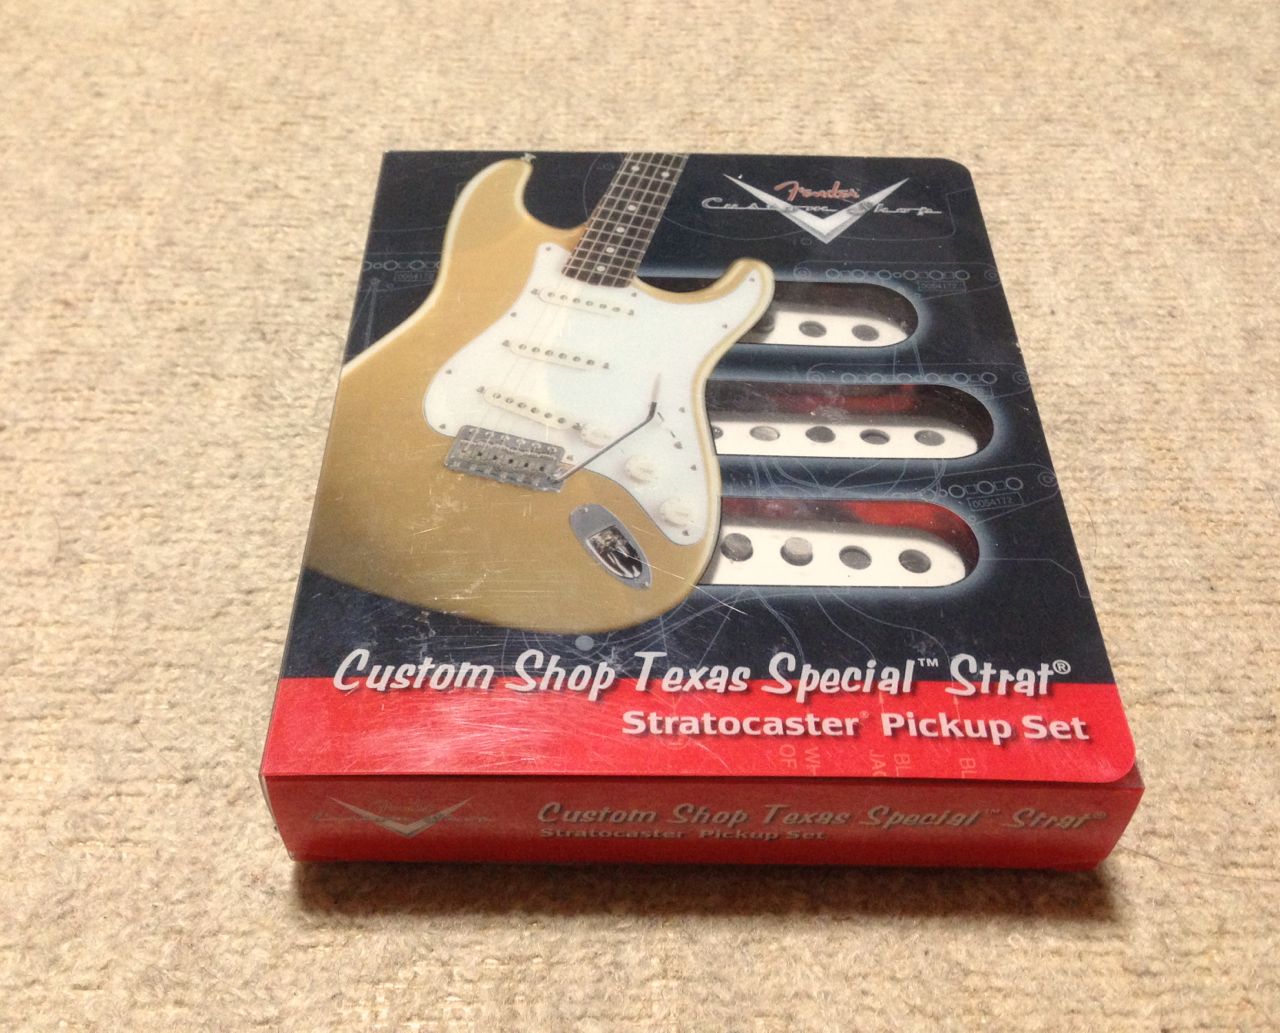 Fender Custom Shop Texas Special Pickup set